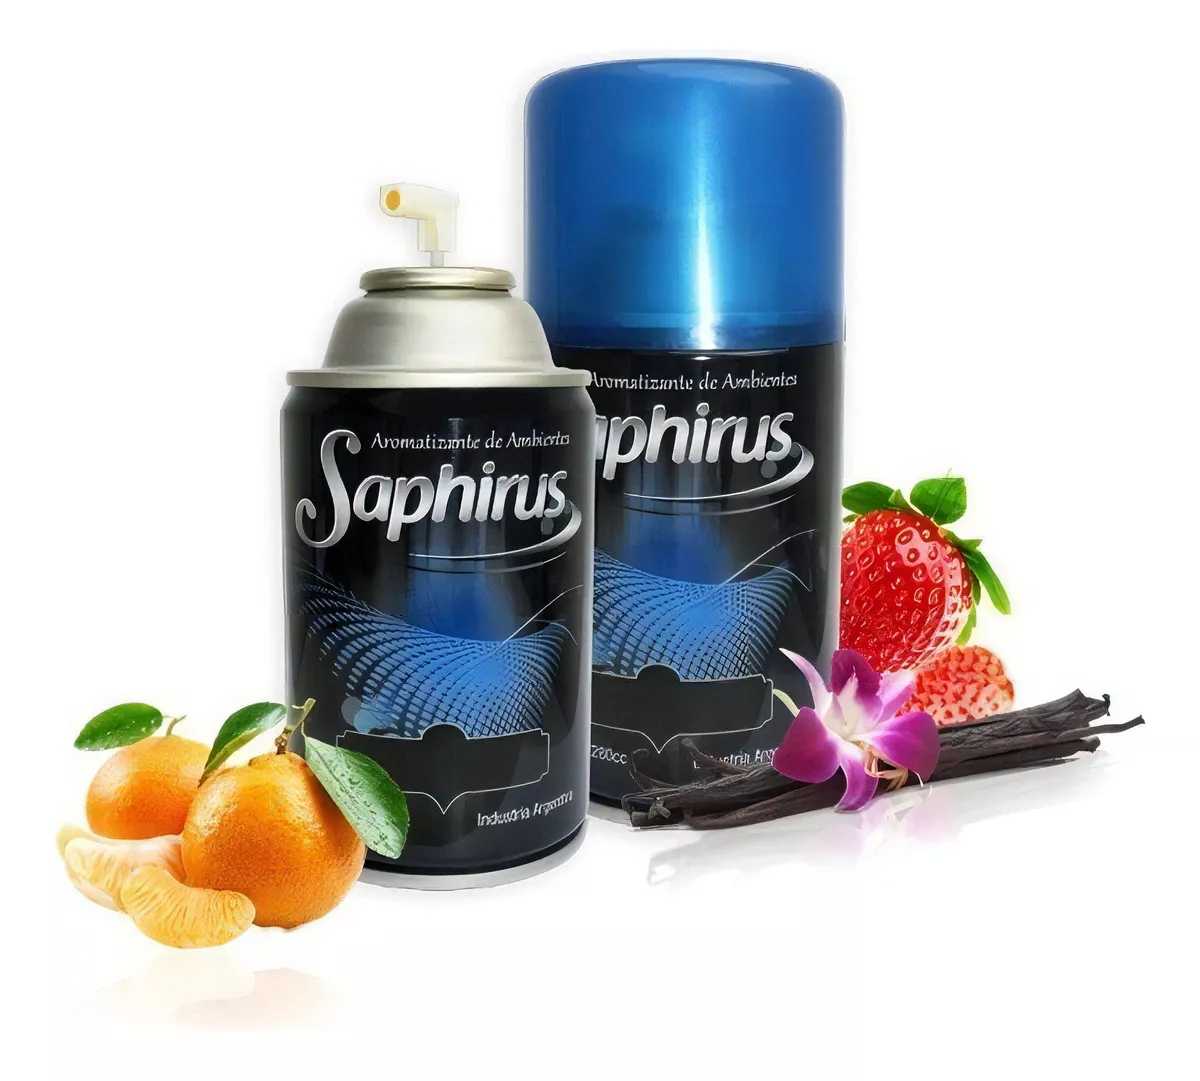 Primera imagen para búsqueda de equipo aromatizador aerosol saphirus